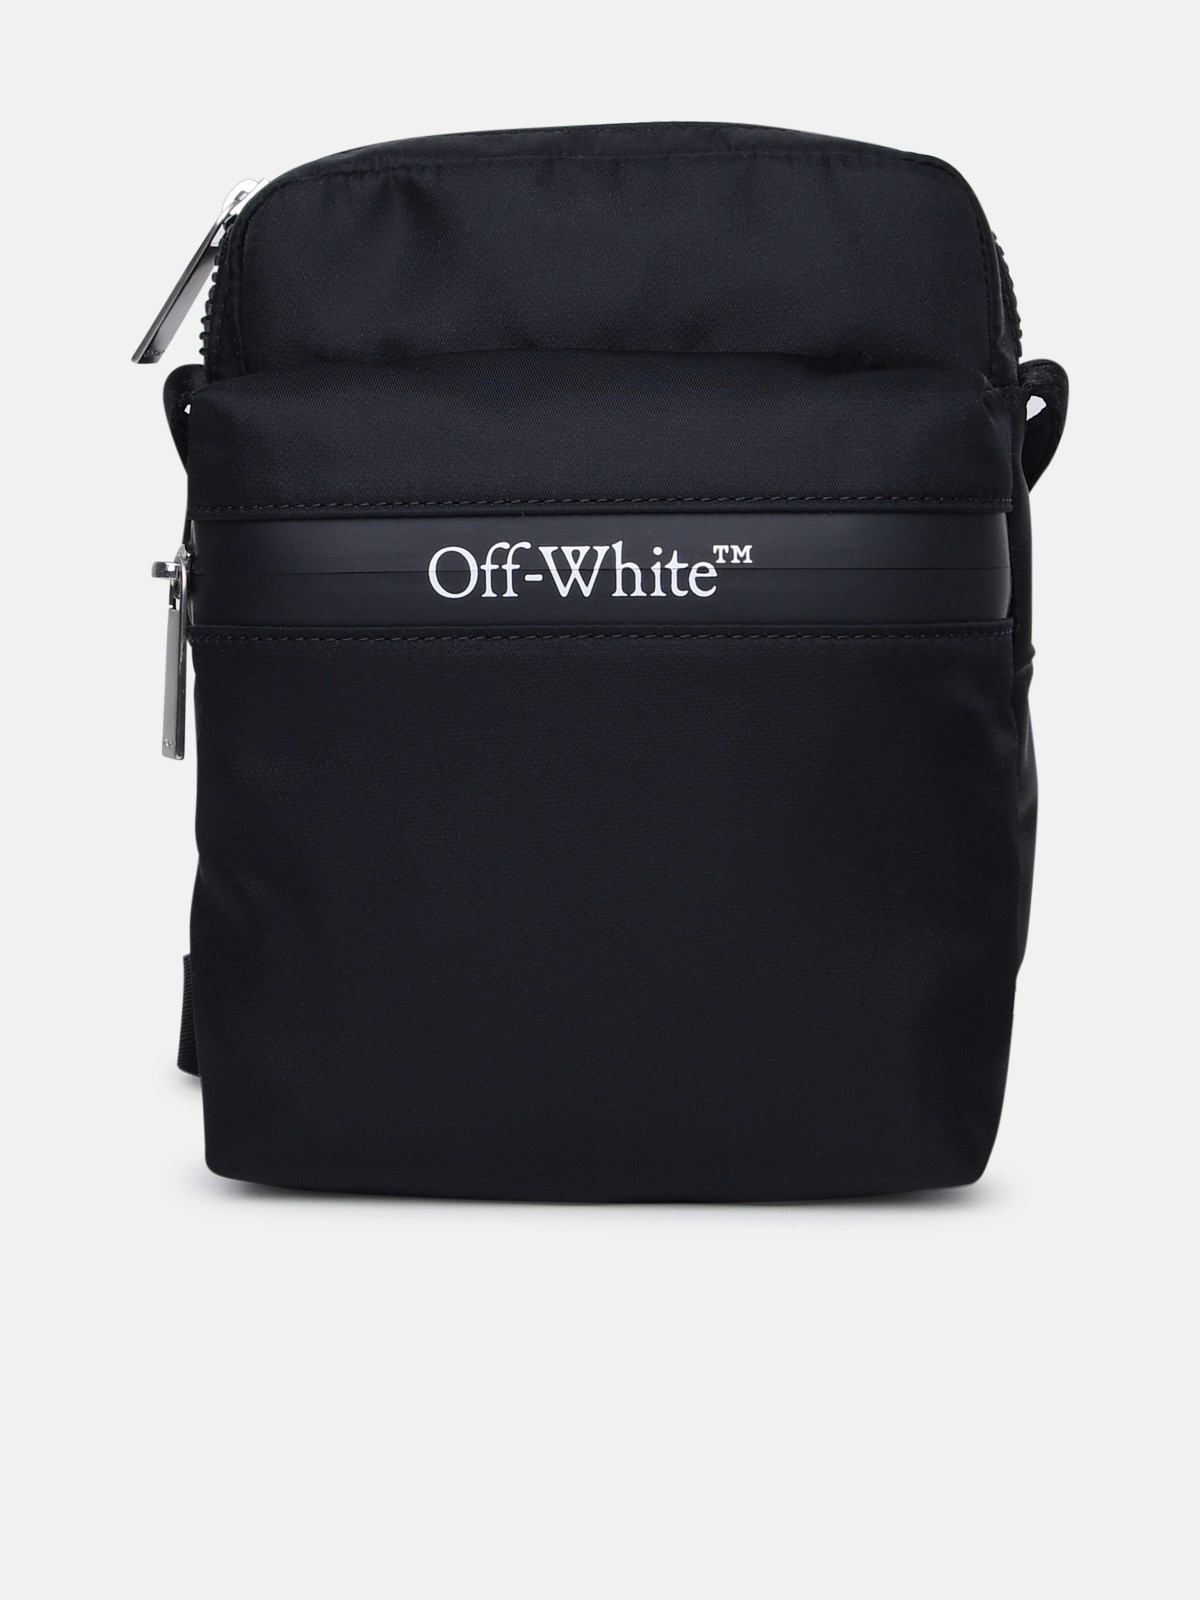 Off-white Black Fabric Bag